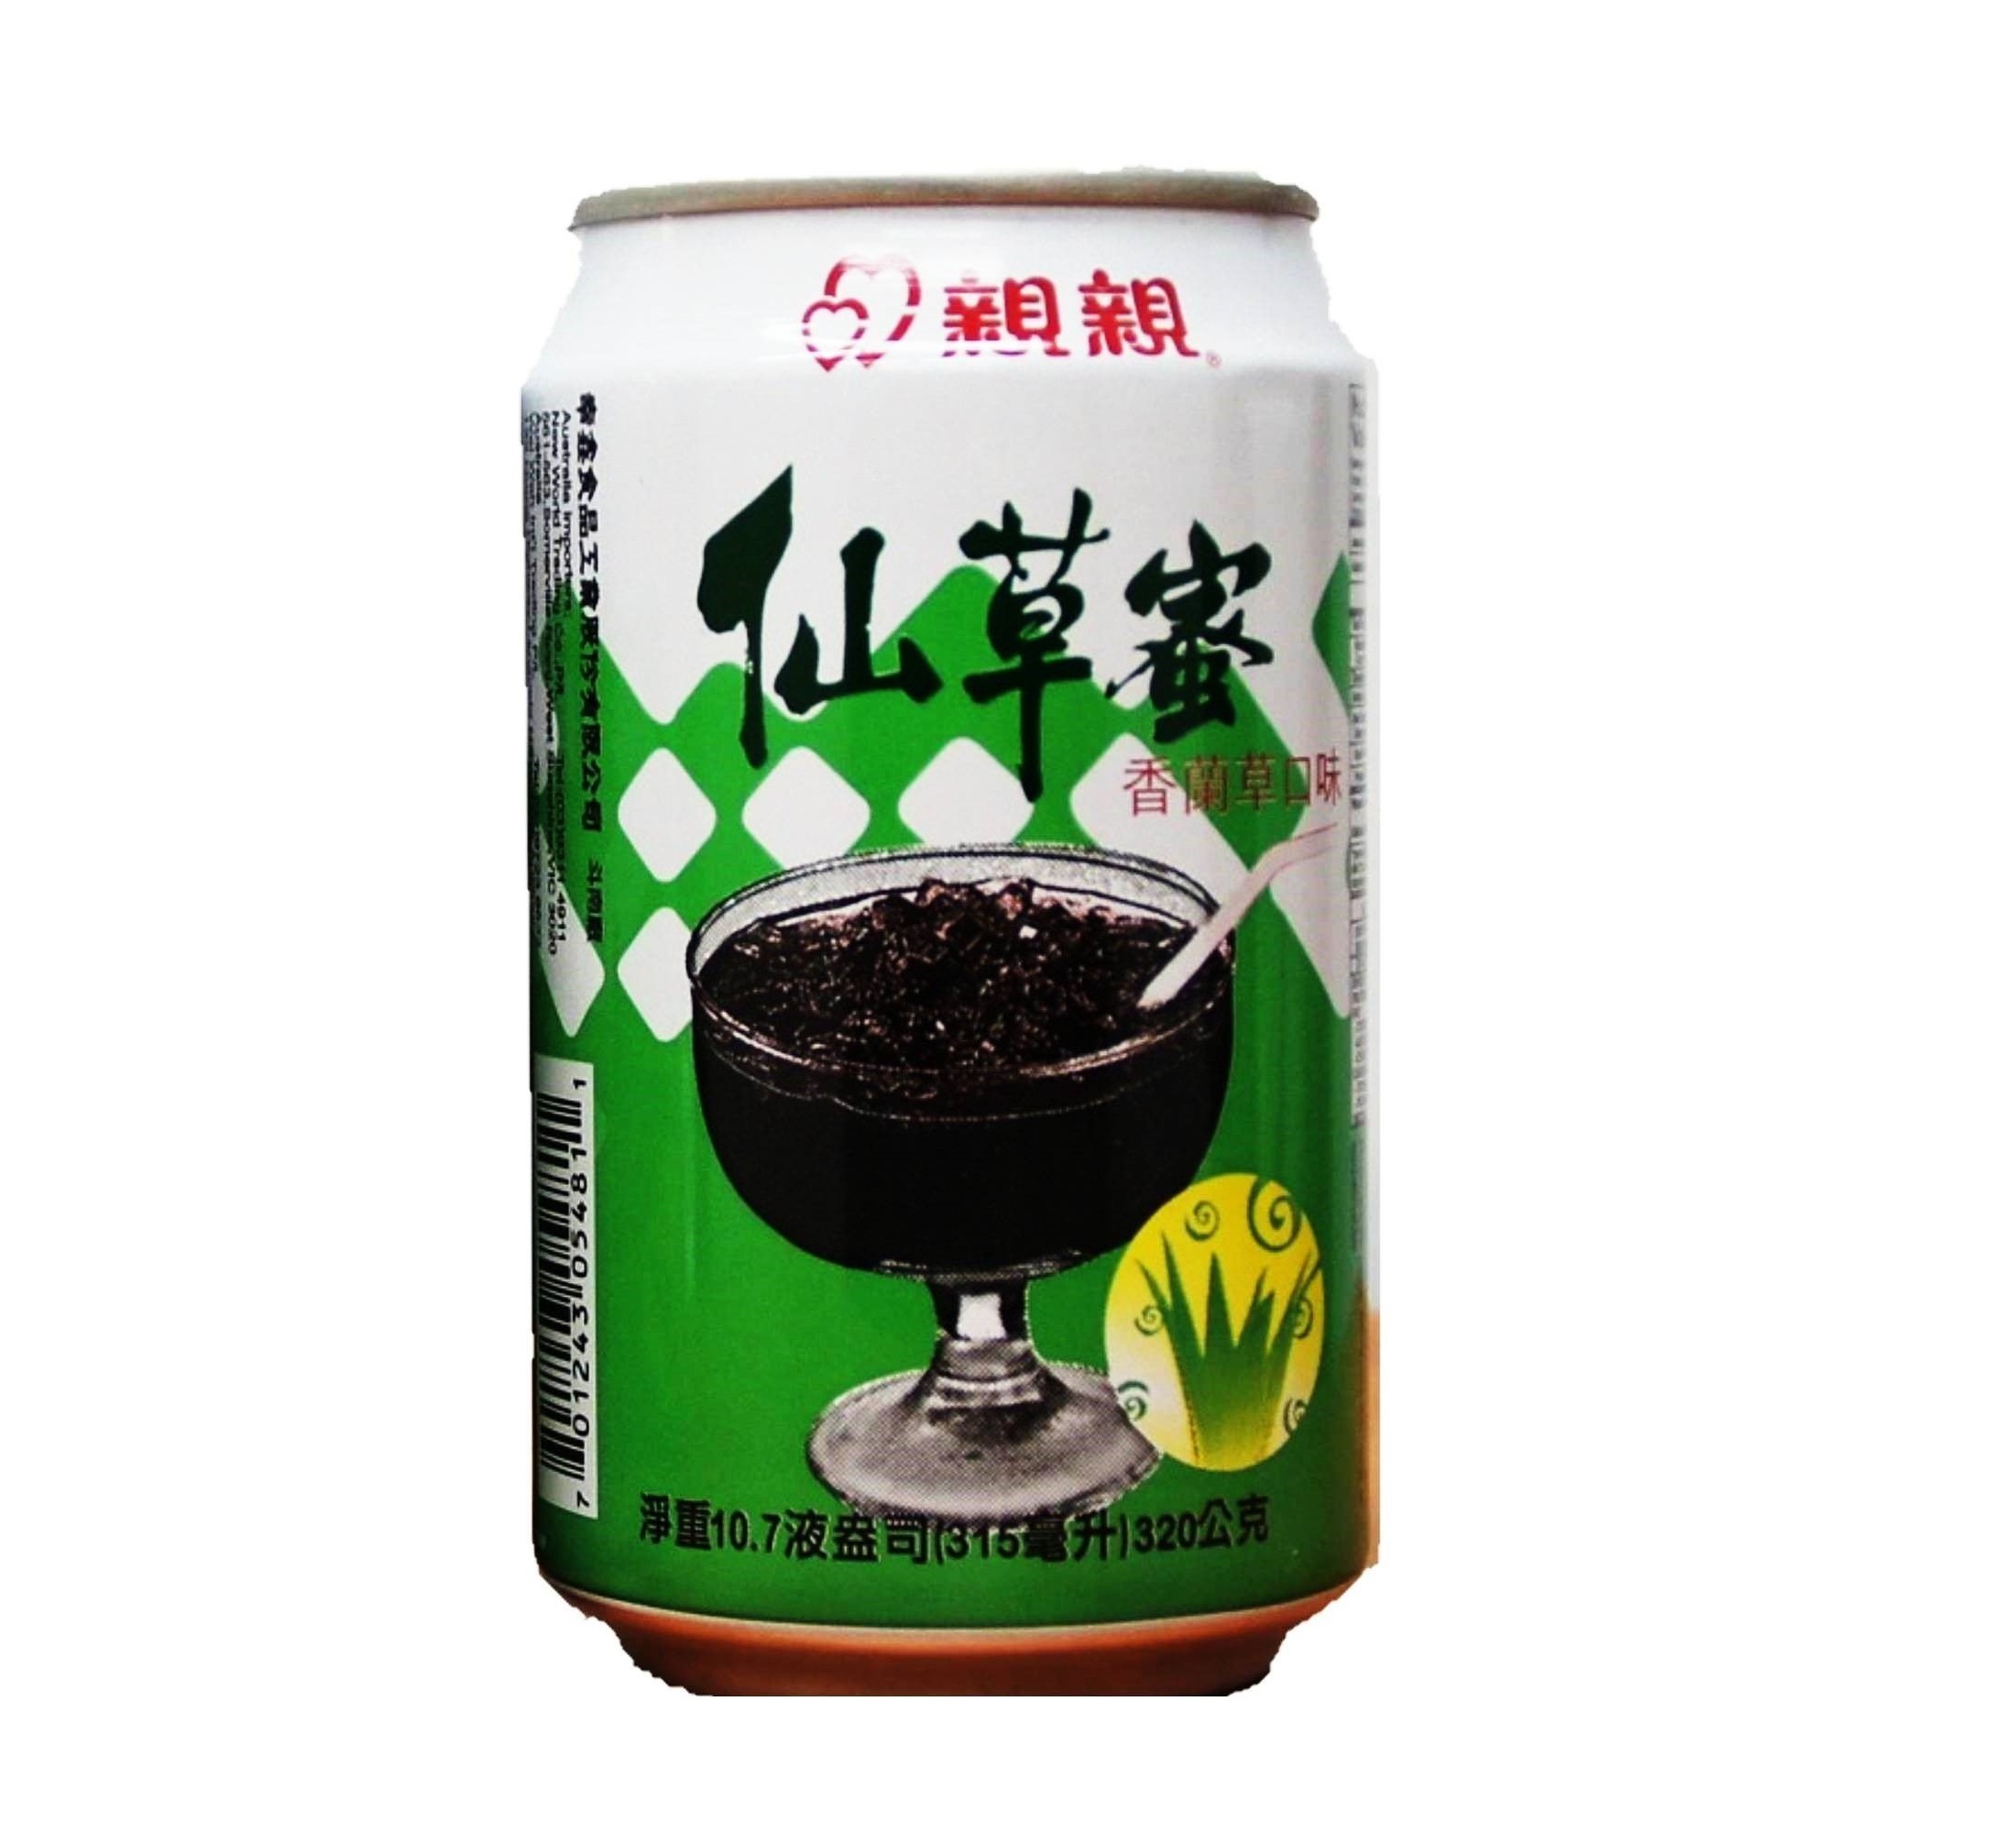 CHIN CHIN PANDAN LEAF GRASS JELLY DRINK DR110055